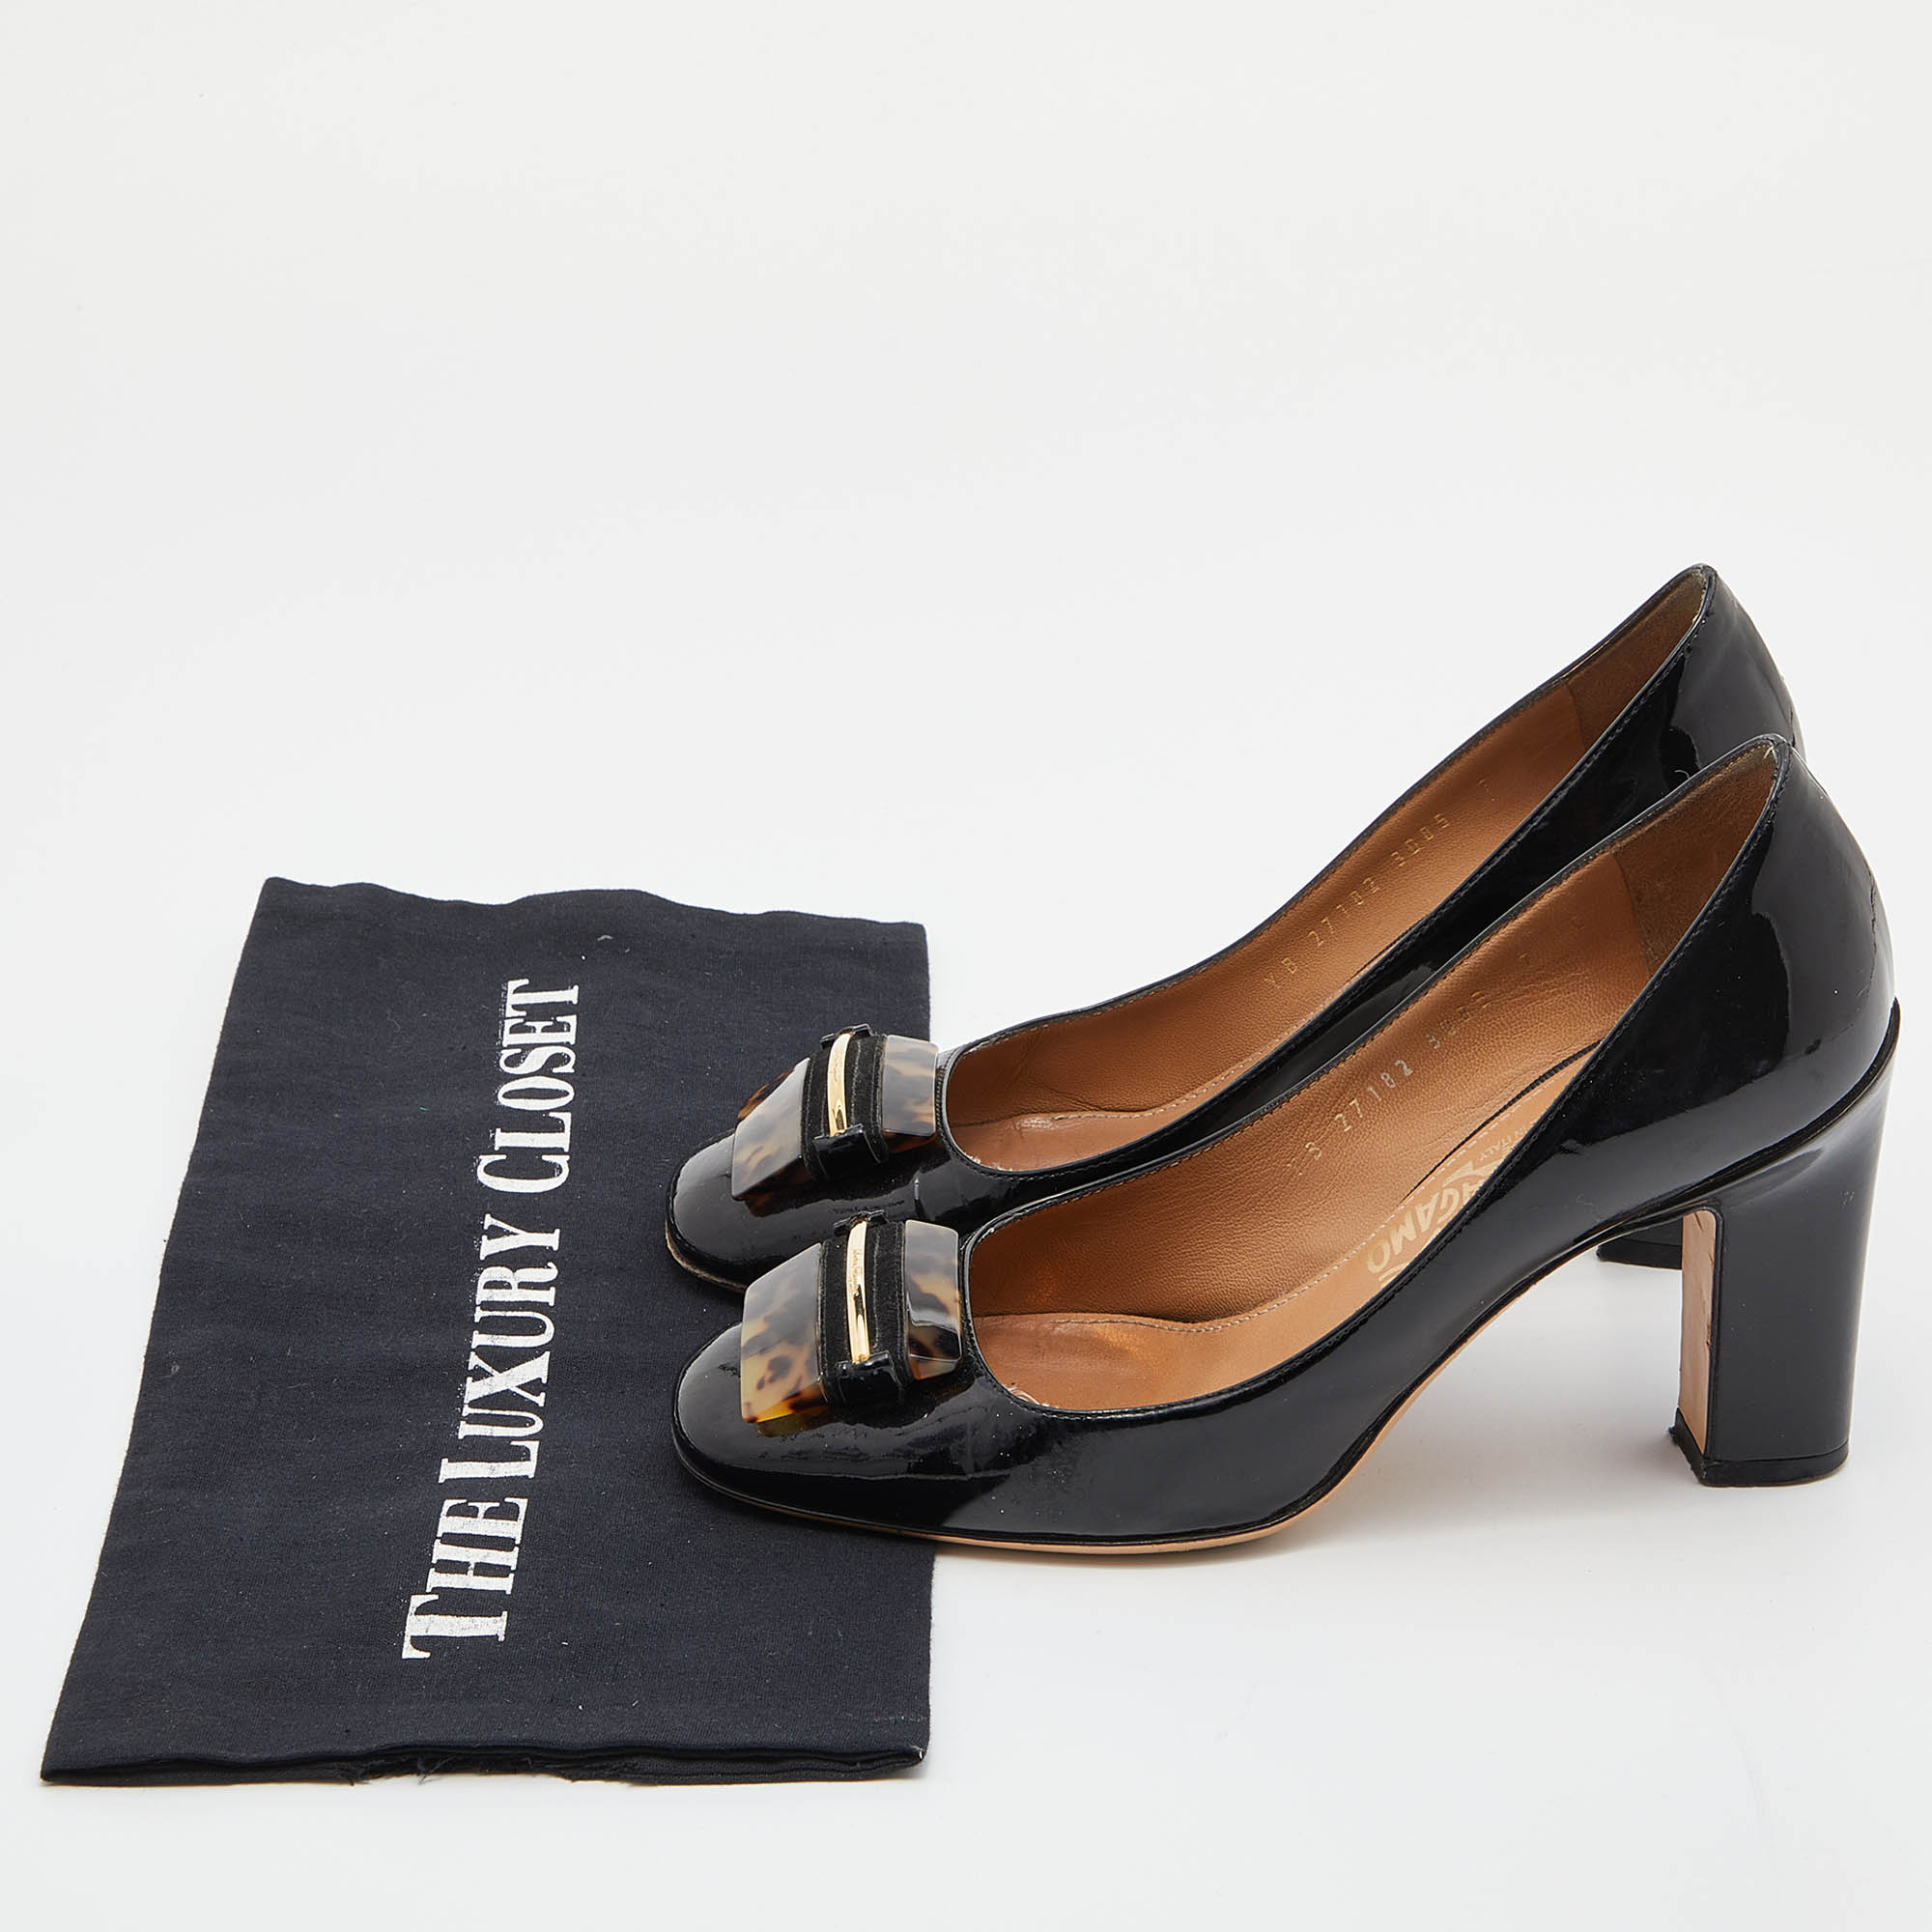 Salvatore Ferragamo Black Patent Leather Block Heel Pumps Size 37.5